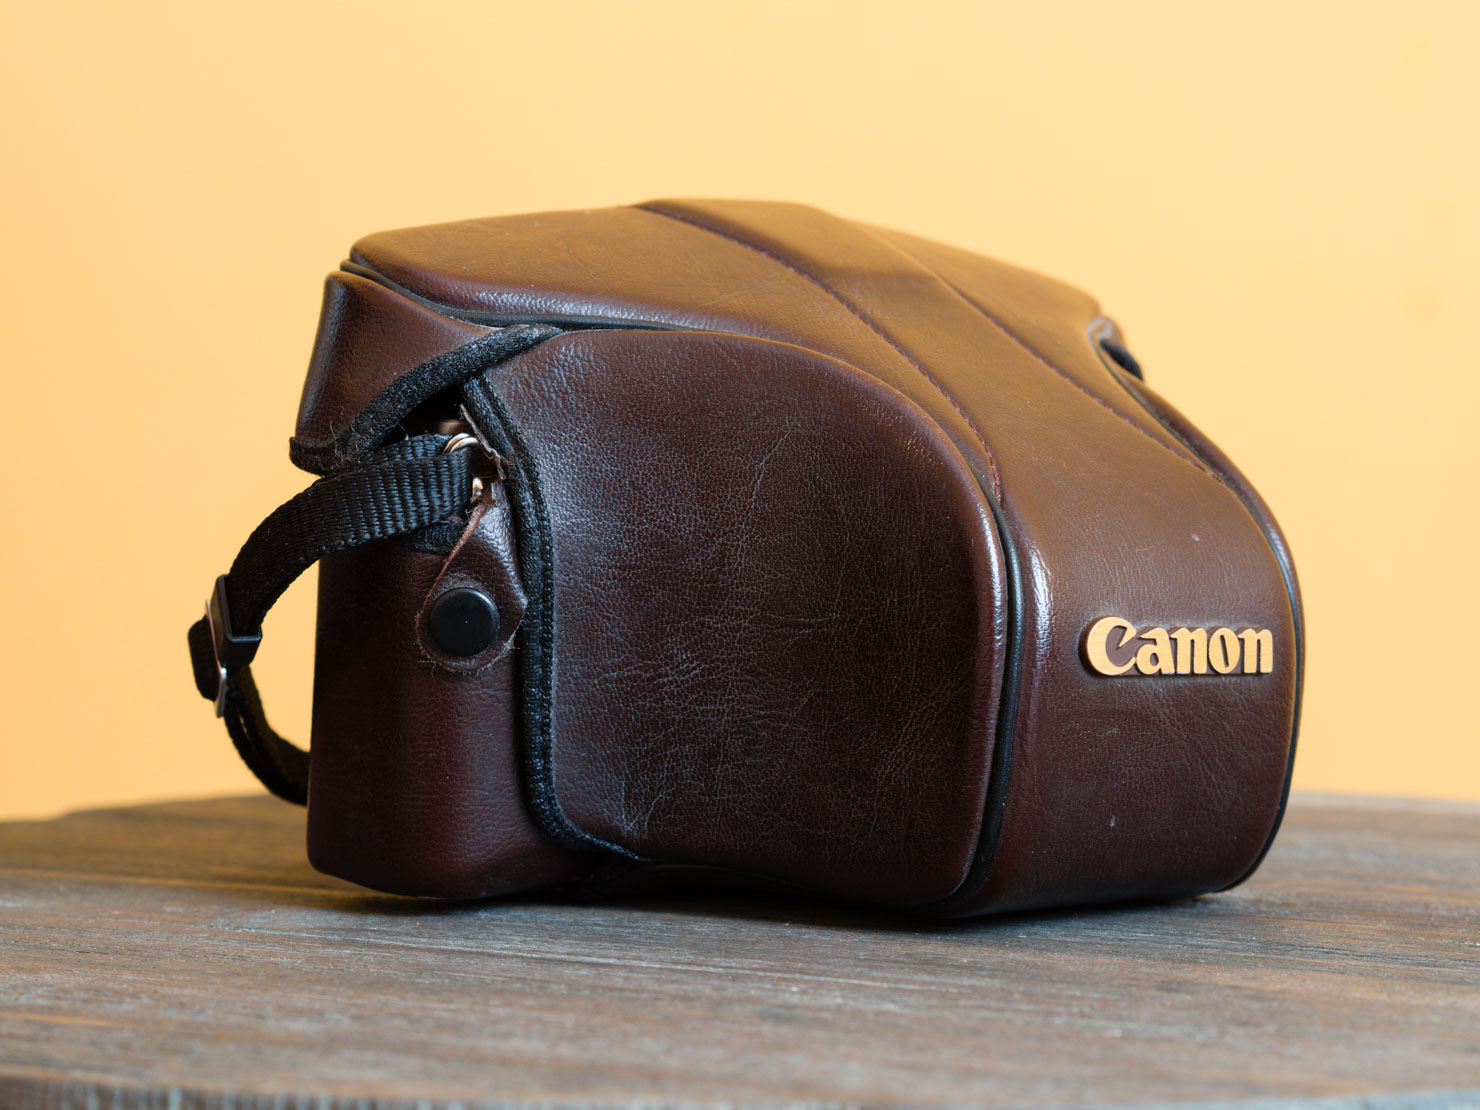 Adventures in Film Photography: The Canon AE-1 Program - Analog Senses